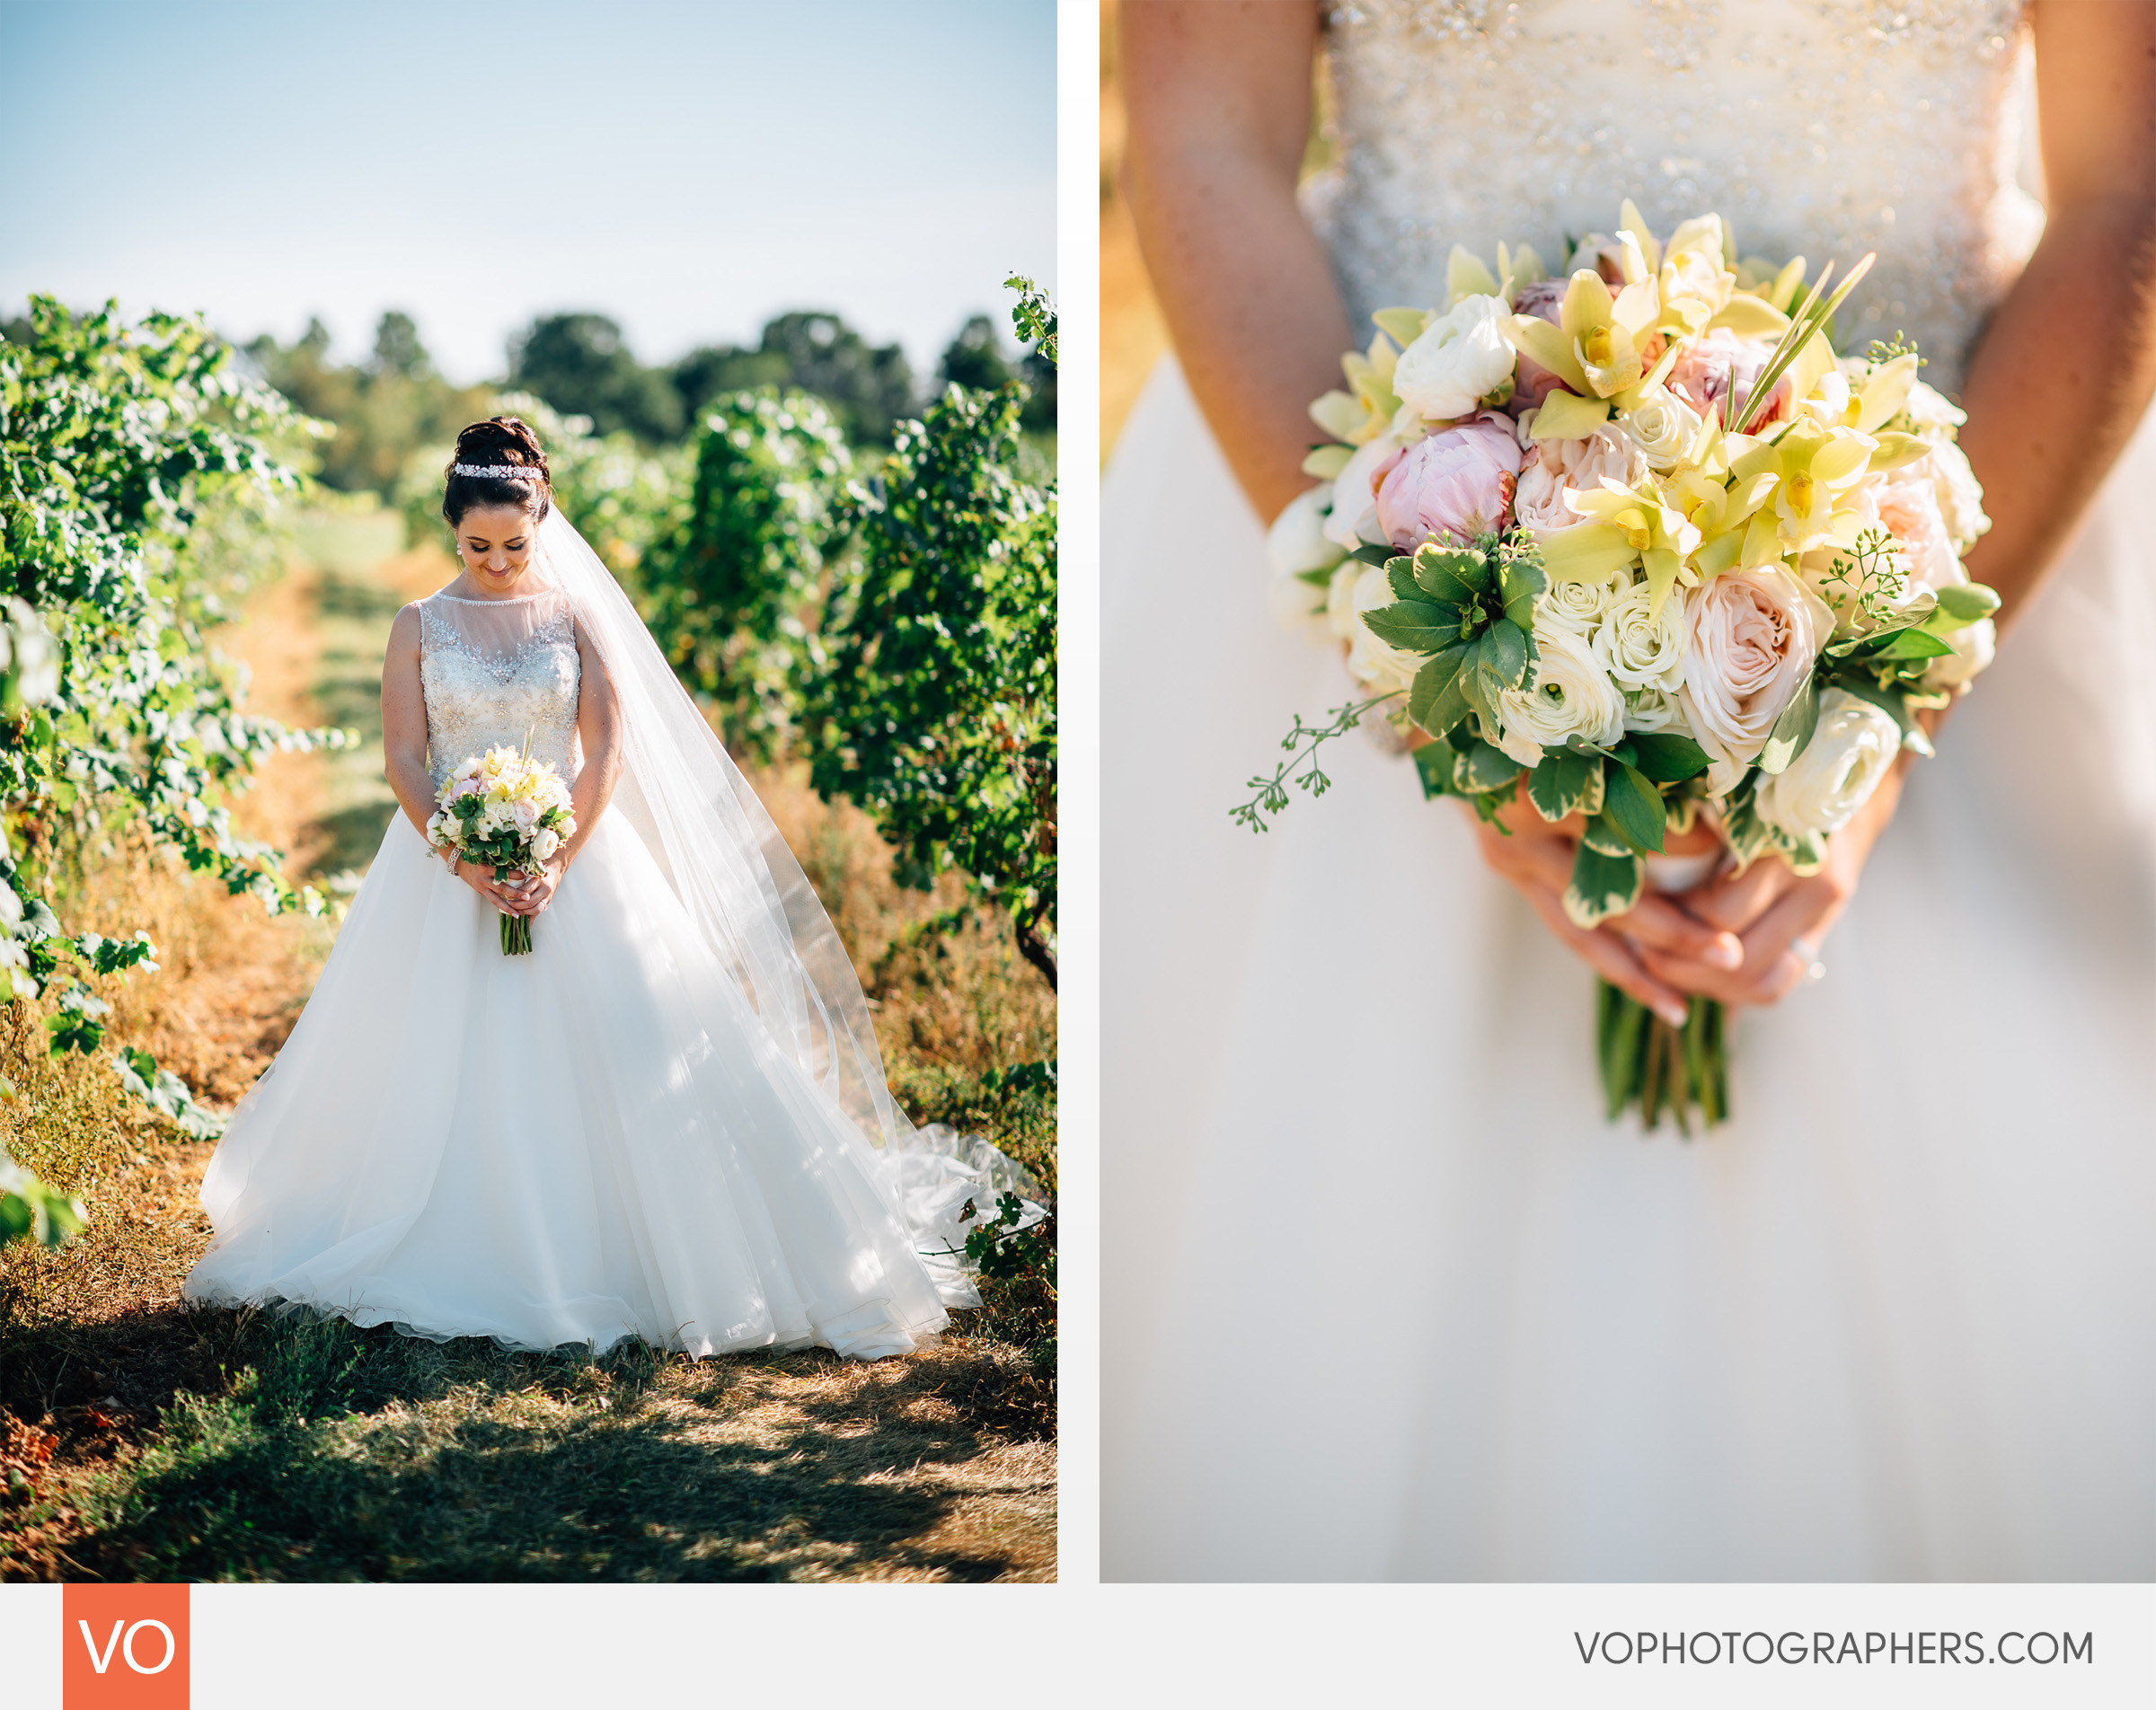 Bride's wedding dress and her bouquet